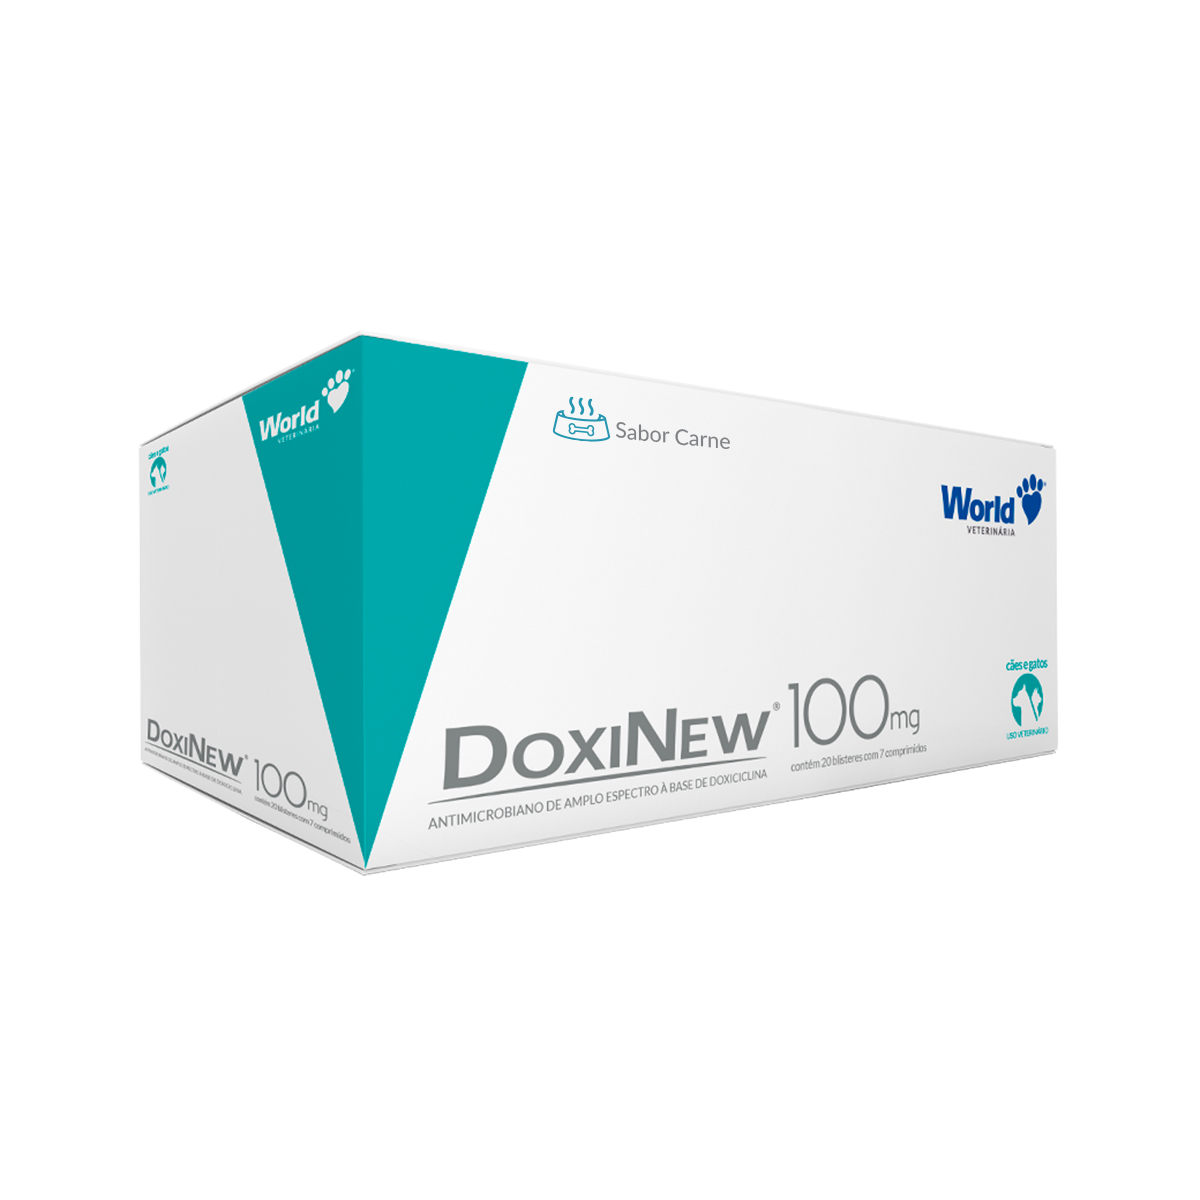 DoxiNew 100mg - display JPG